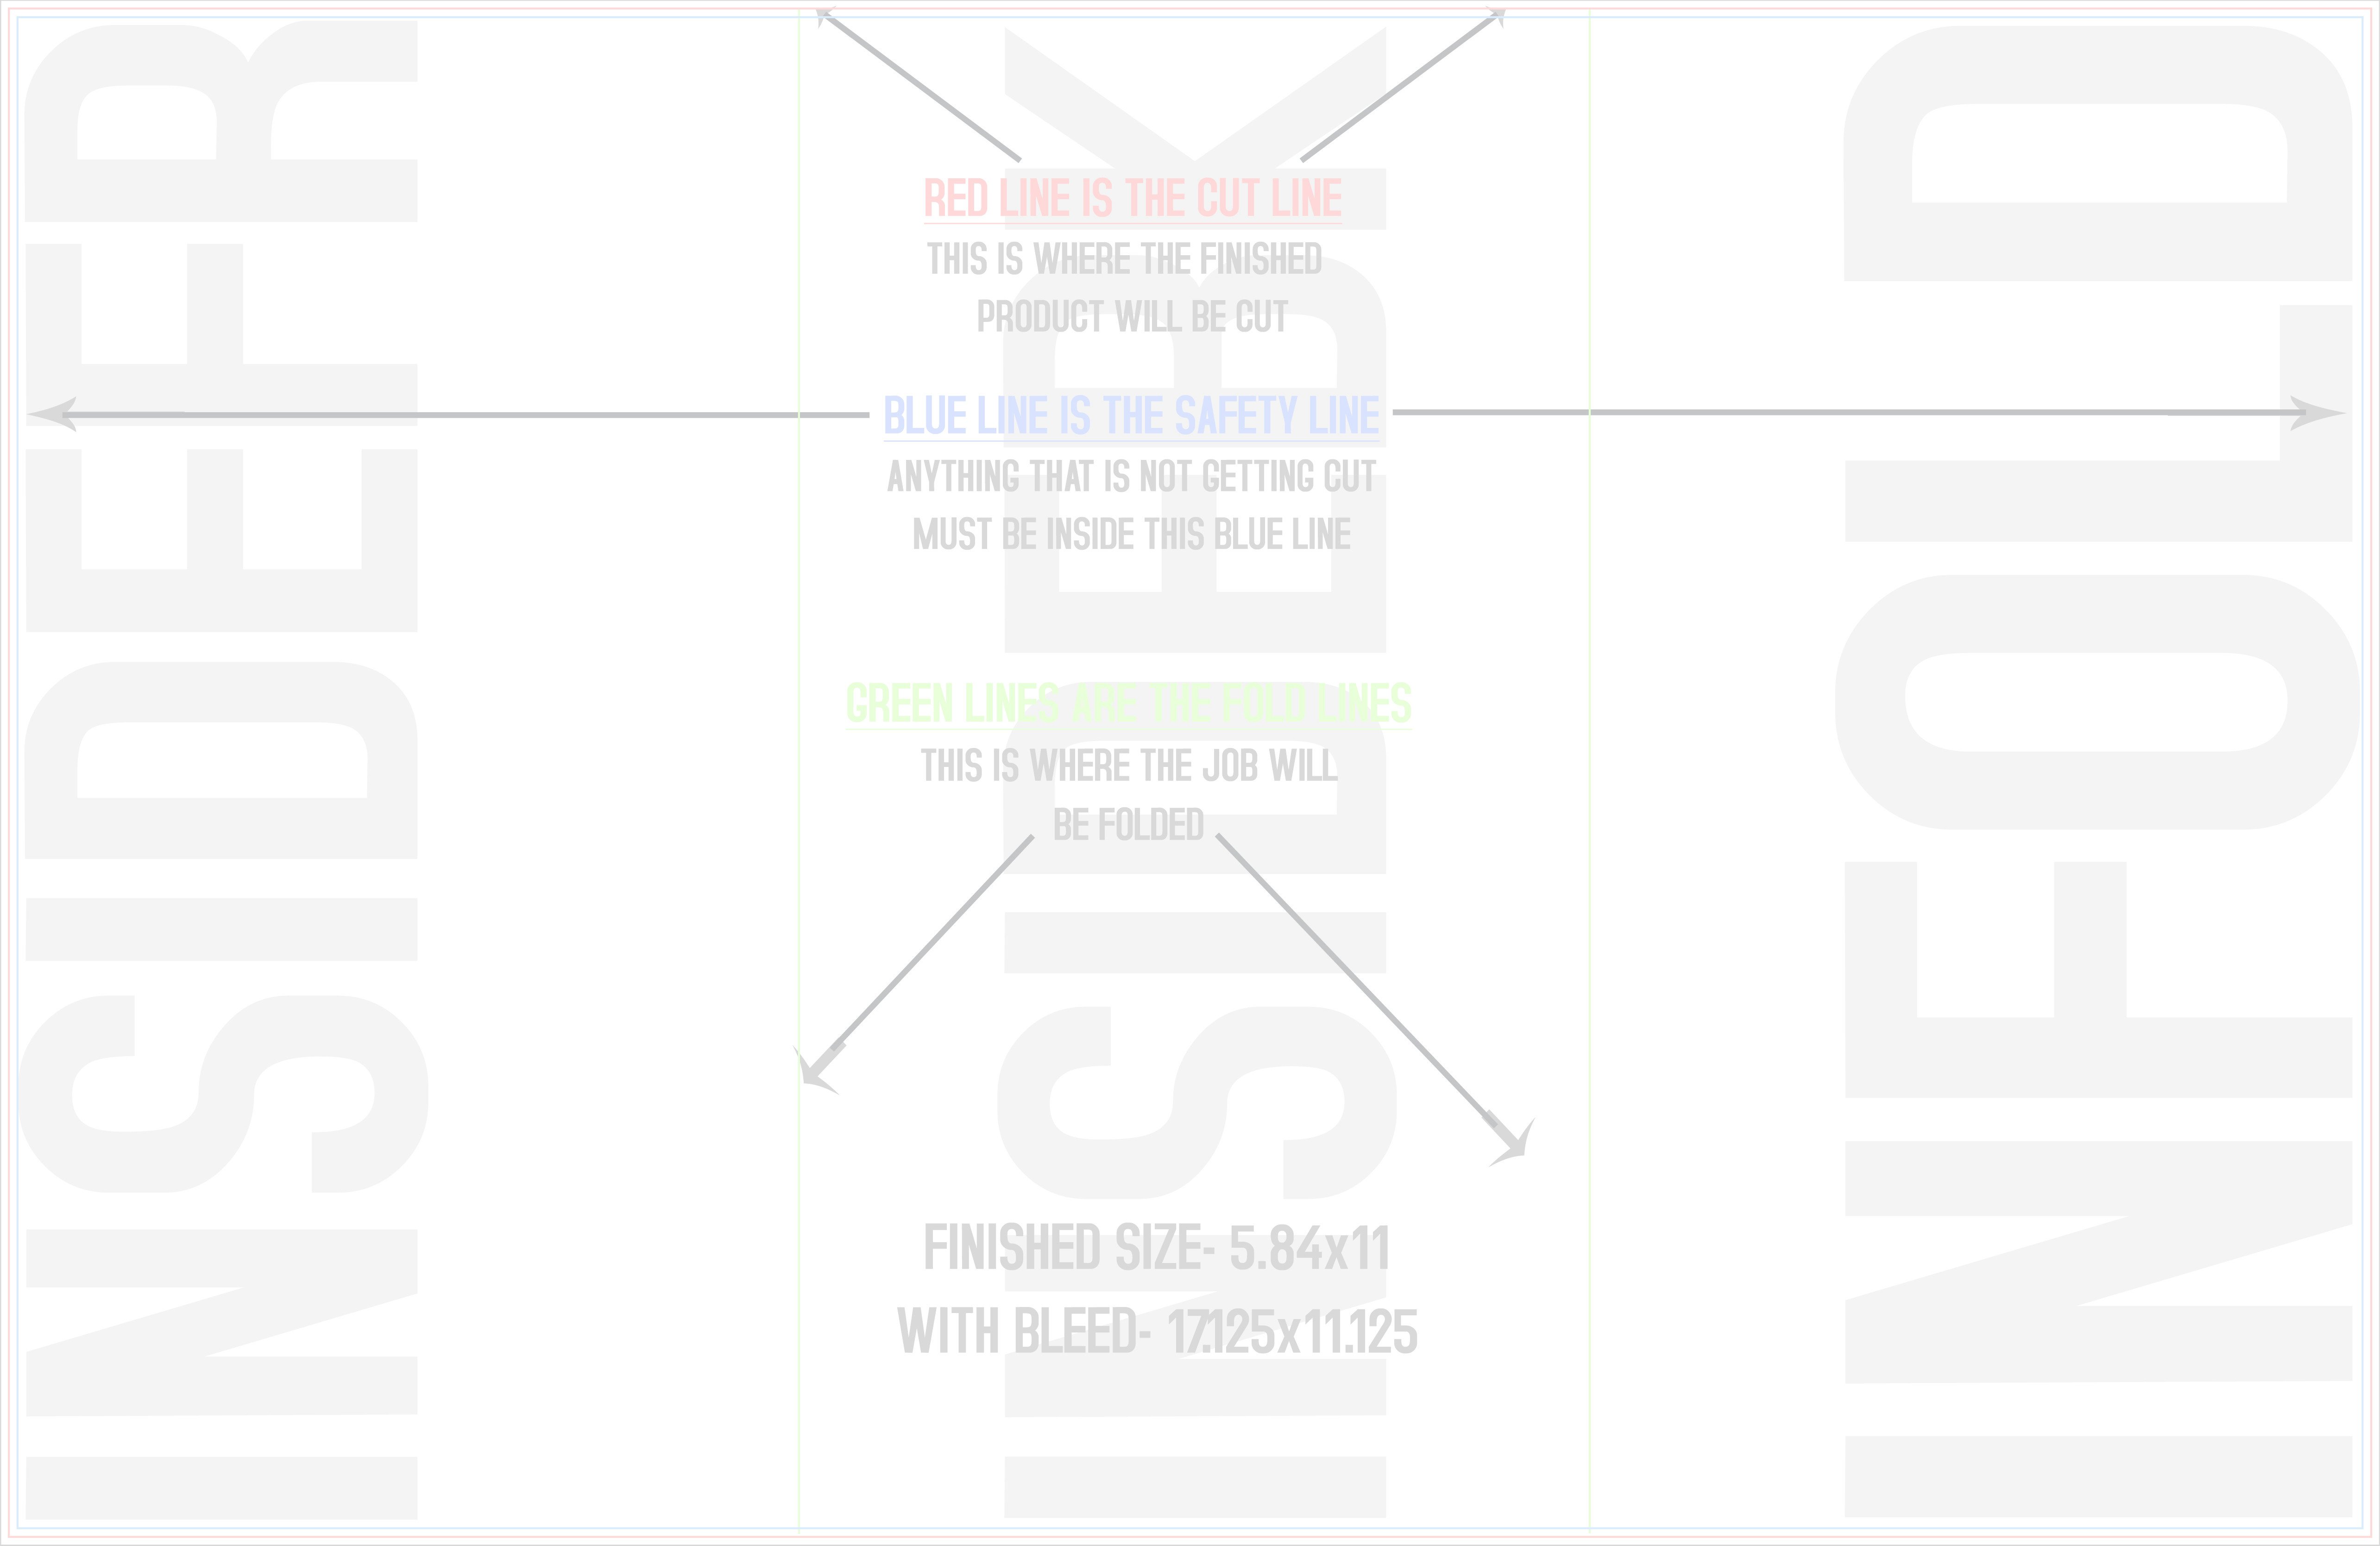 Takeout menu printing Print to go menus online menu flyers